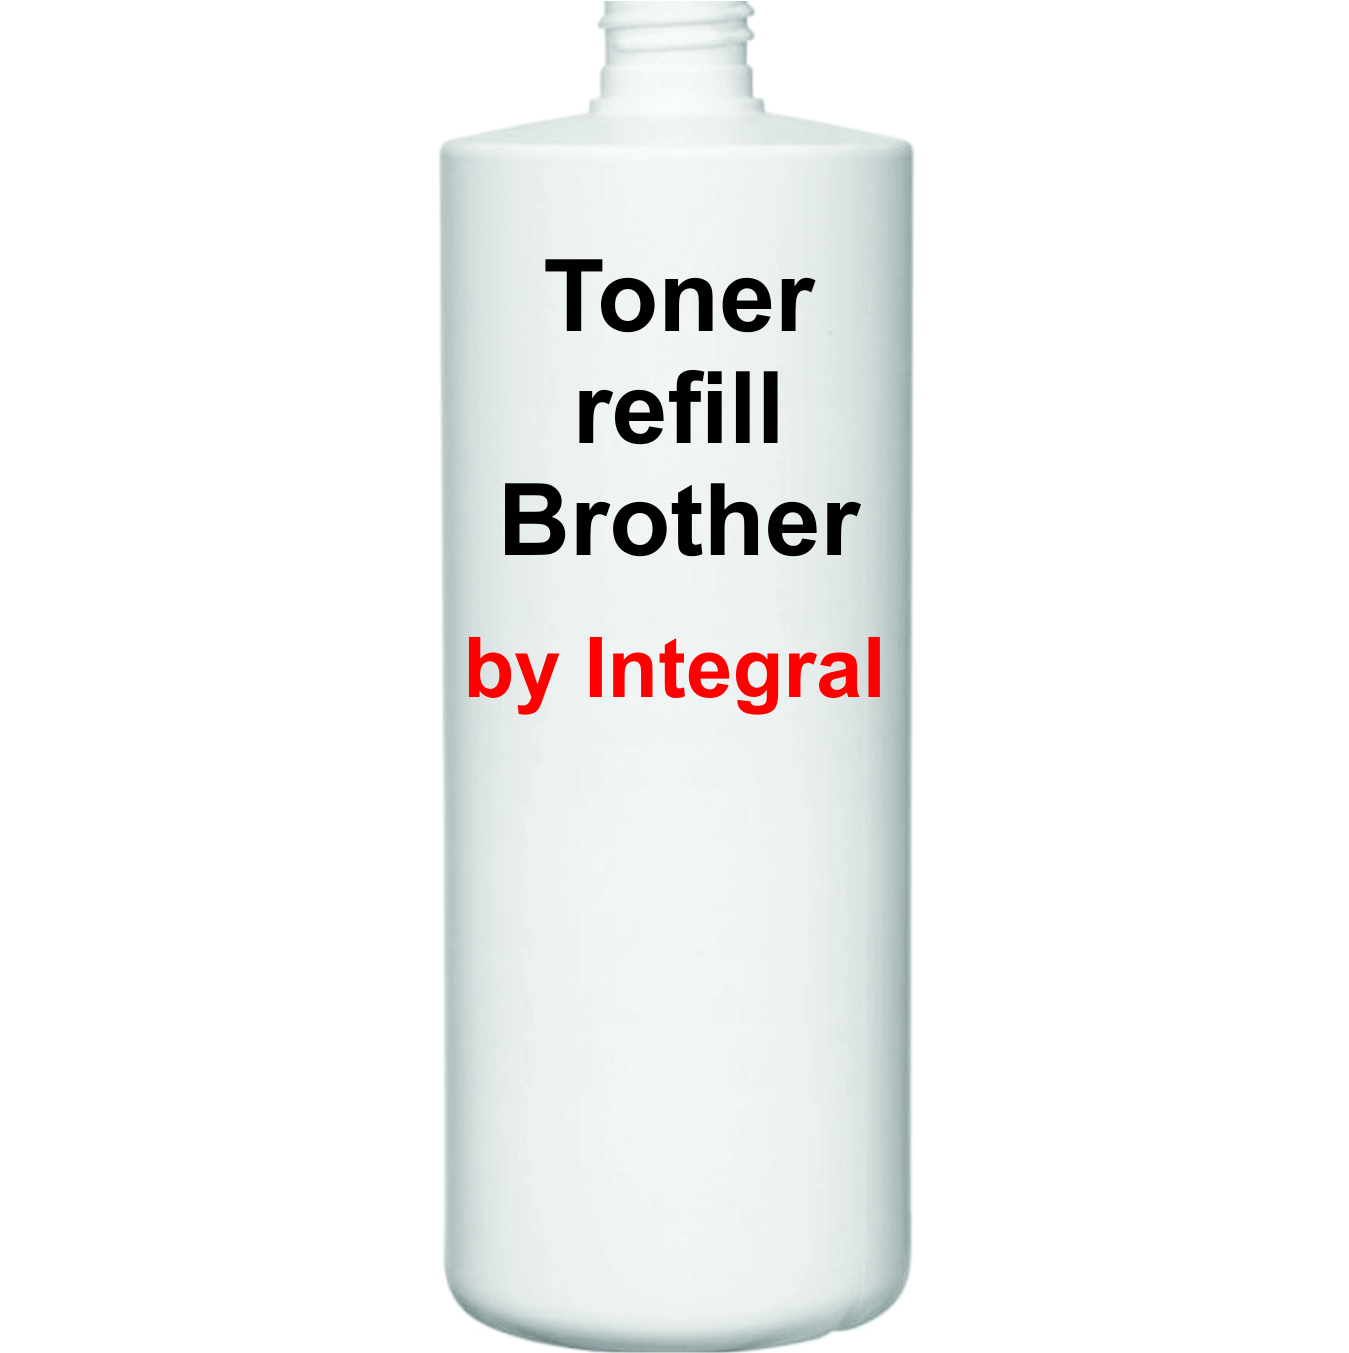 Toner refill cartus Brother TN2411 TN2421 1000g by Integral